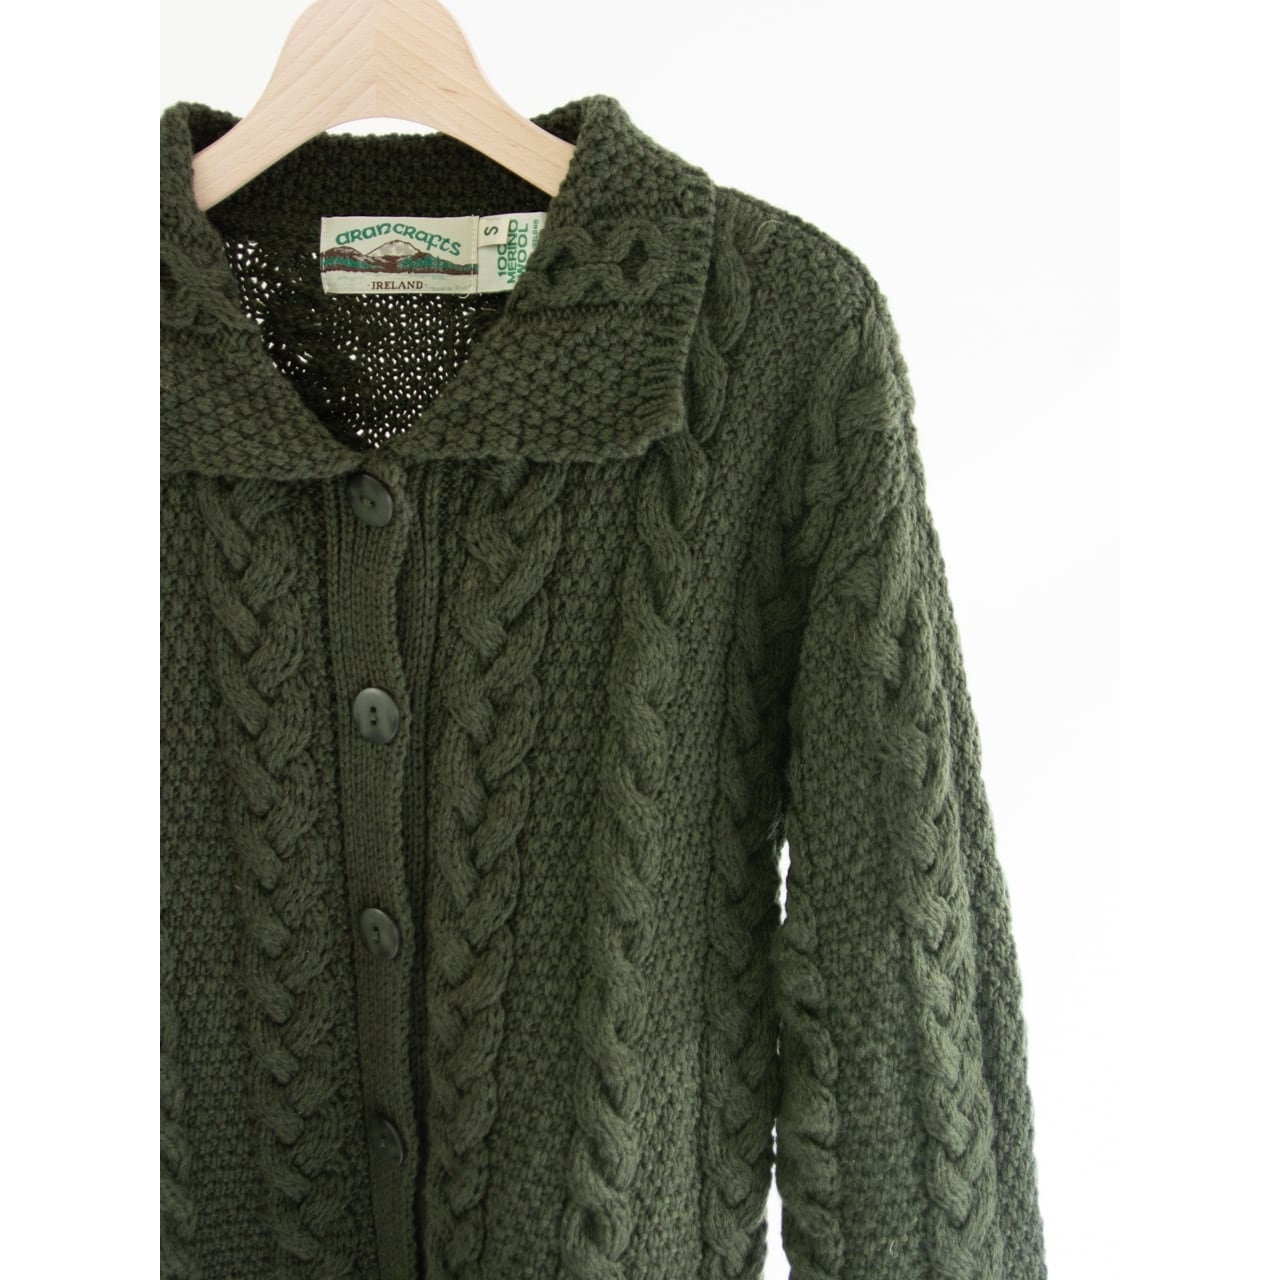 aran crafts】Made in Ireland 100% Merino Wool Fisherman Knit